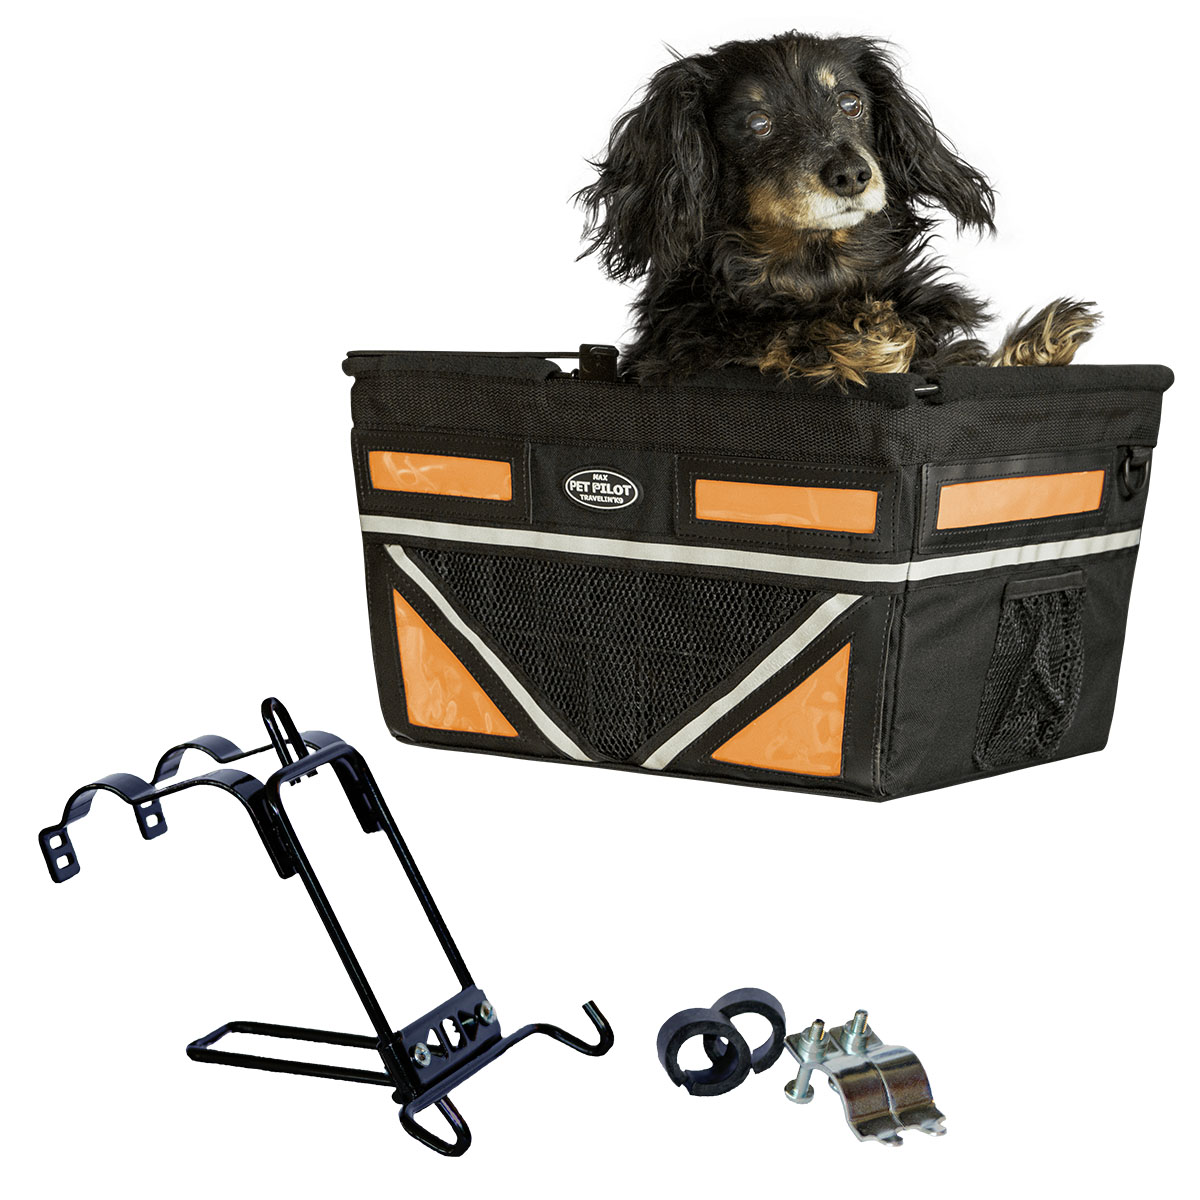 Ptx-8182 Max Dog Bicycle Basket Carrier, Neon Orange